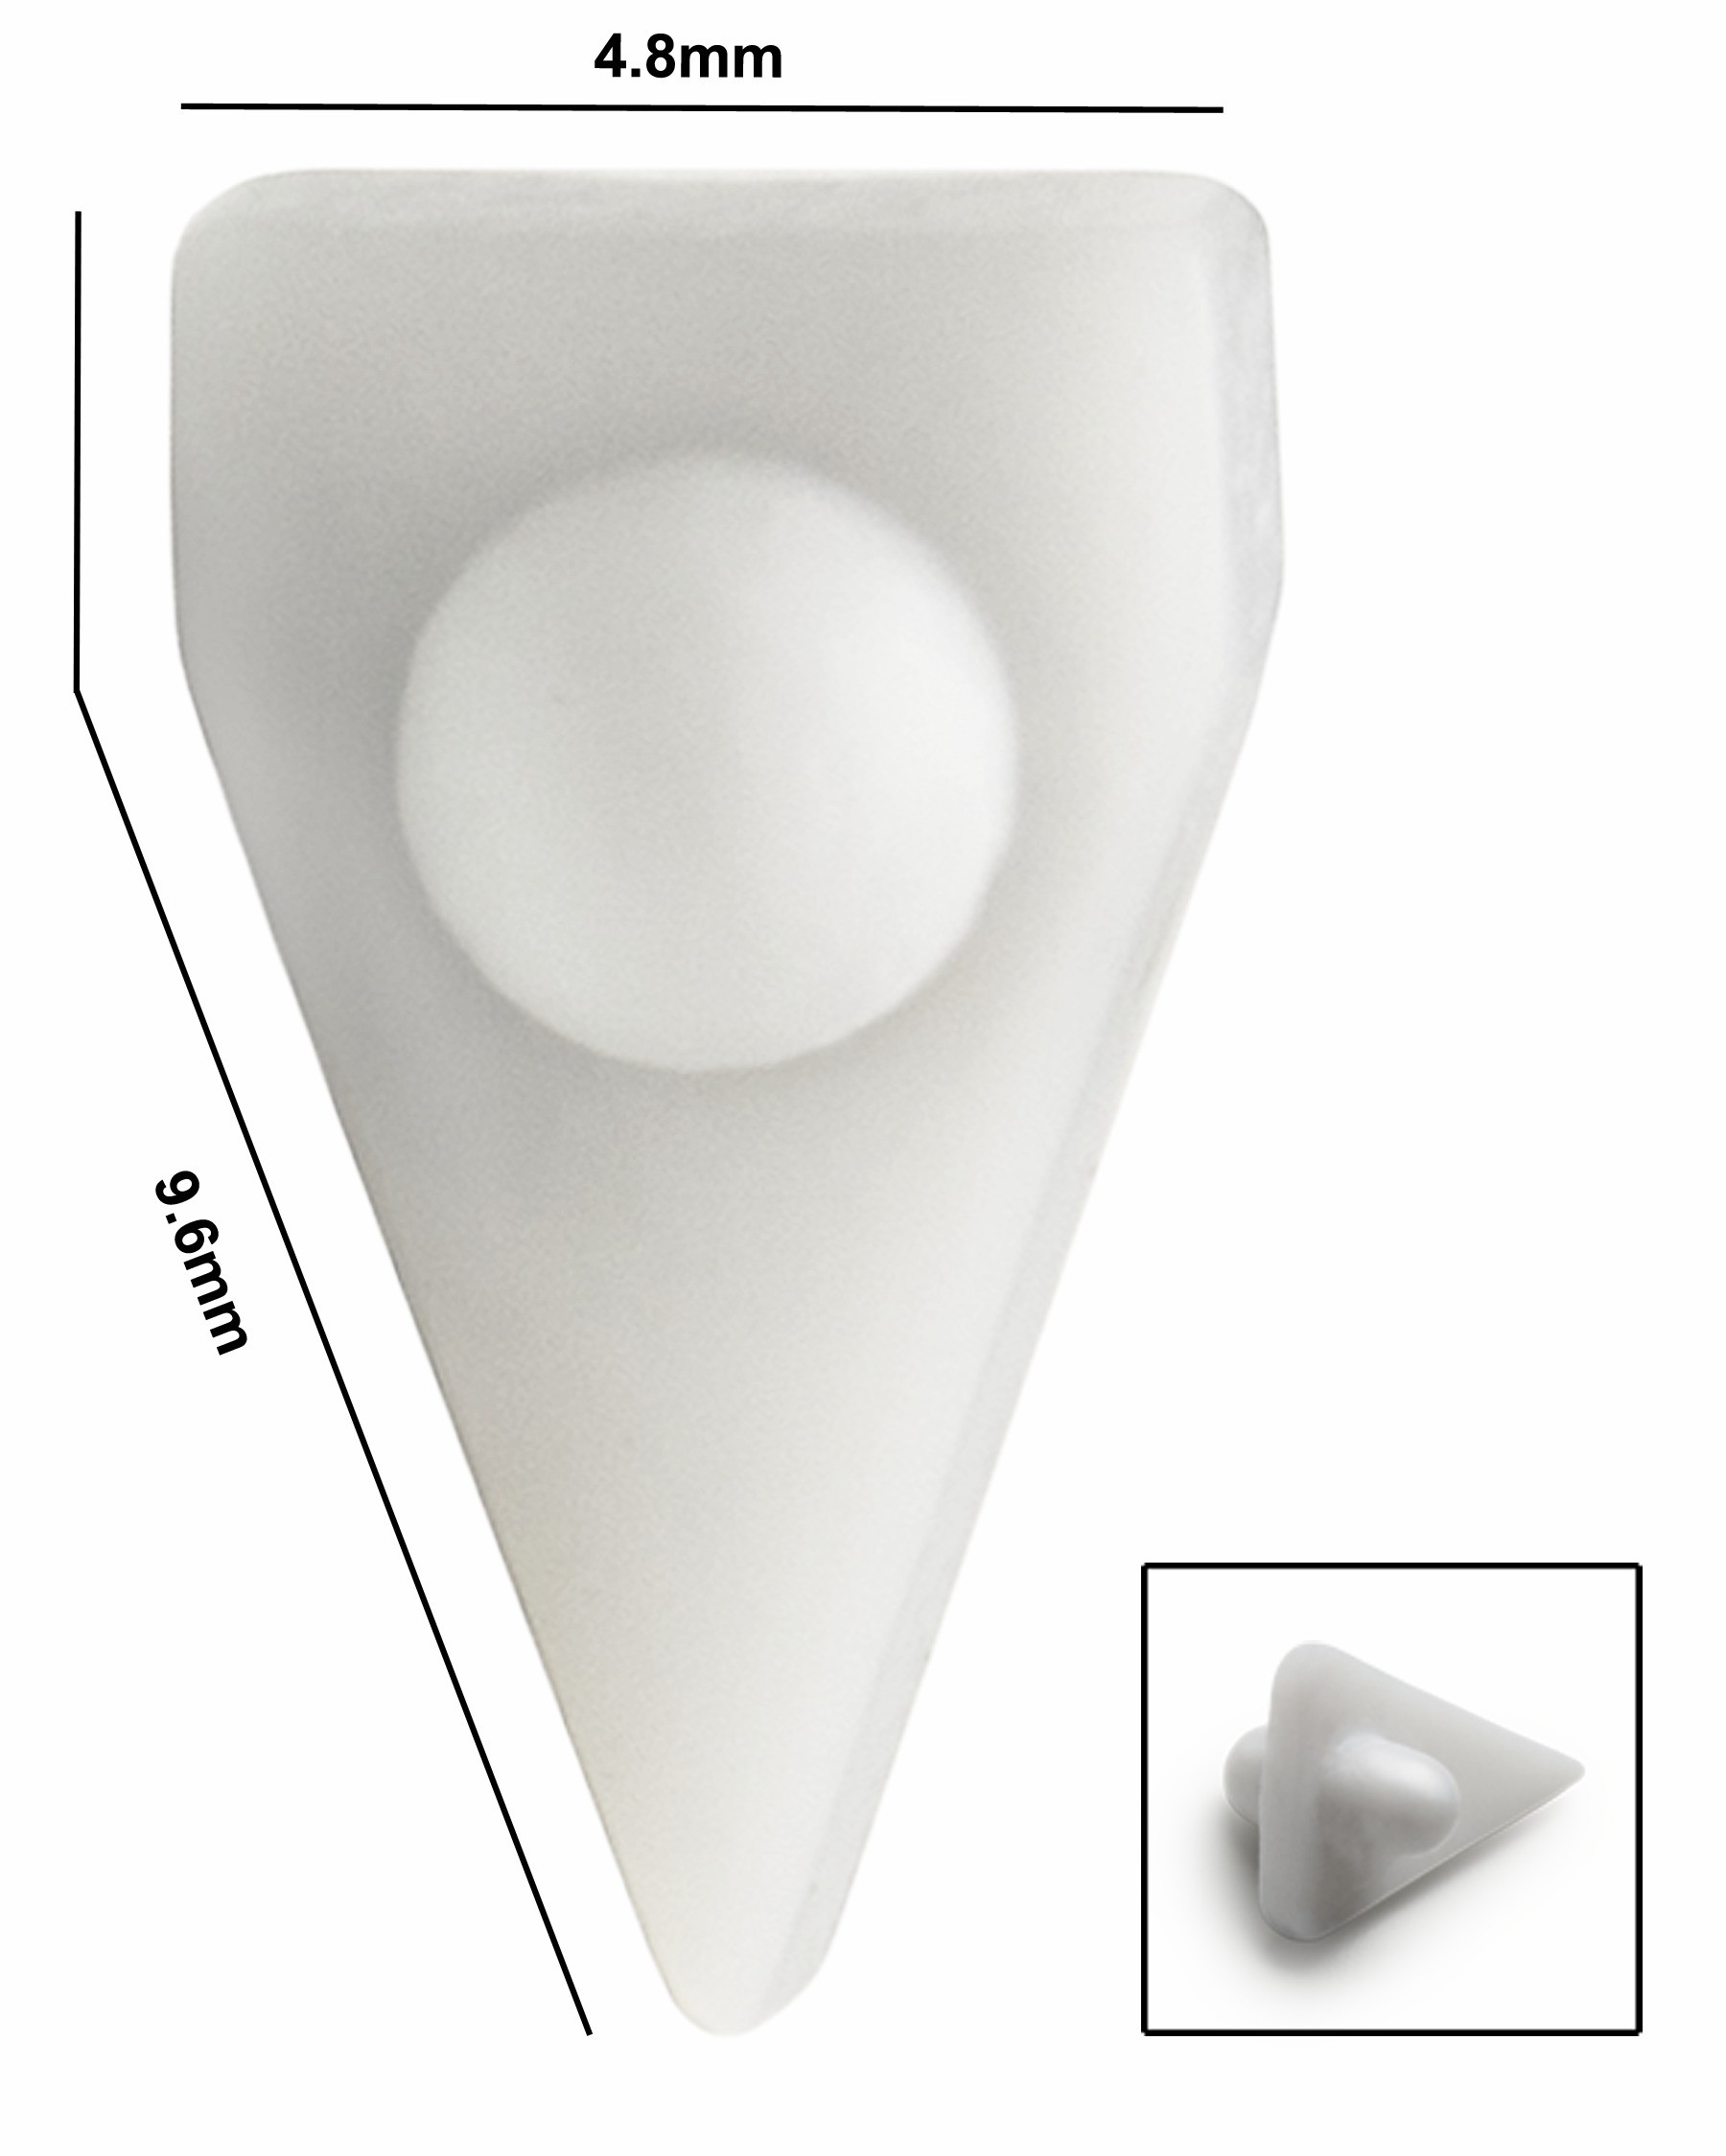 SP Bel-Art Spinvane Teflon Triangular Magnetic Stirring Bar; 5.6 x 9.6 x 4.8mm, Fits 1 ml Vials, White